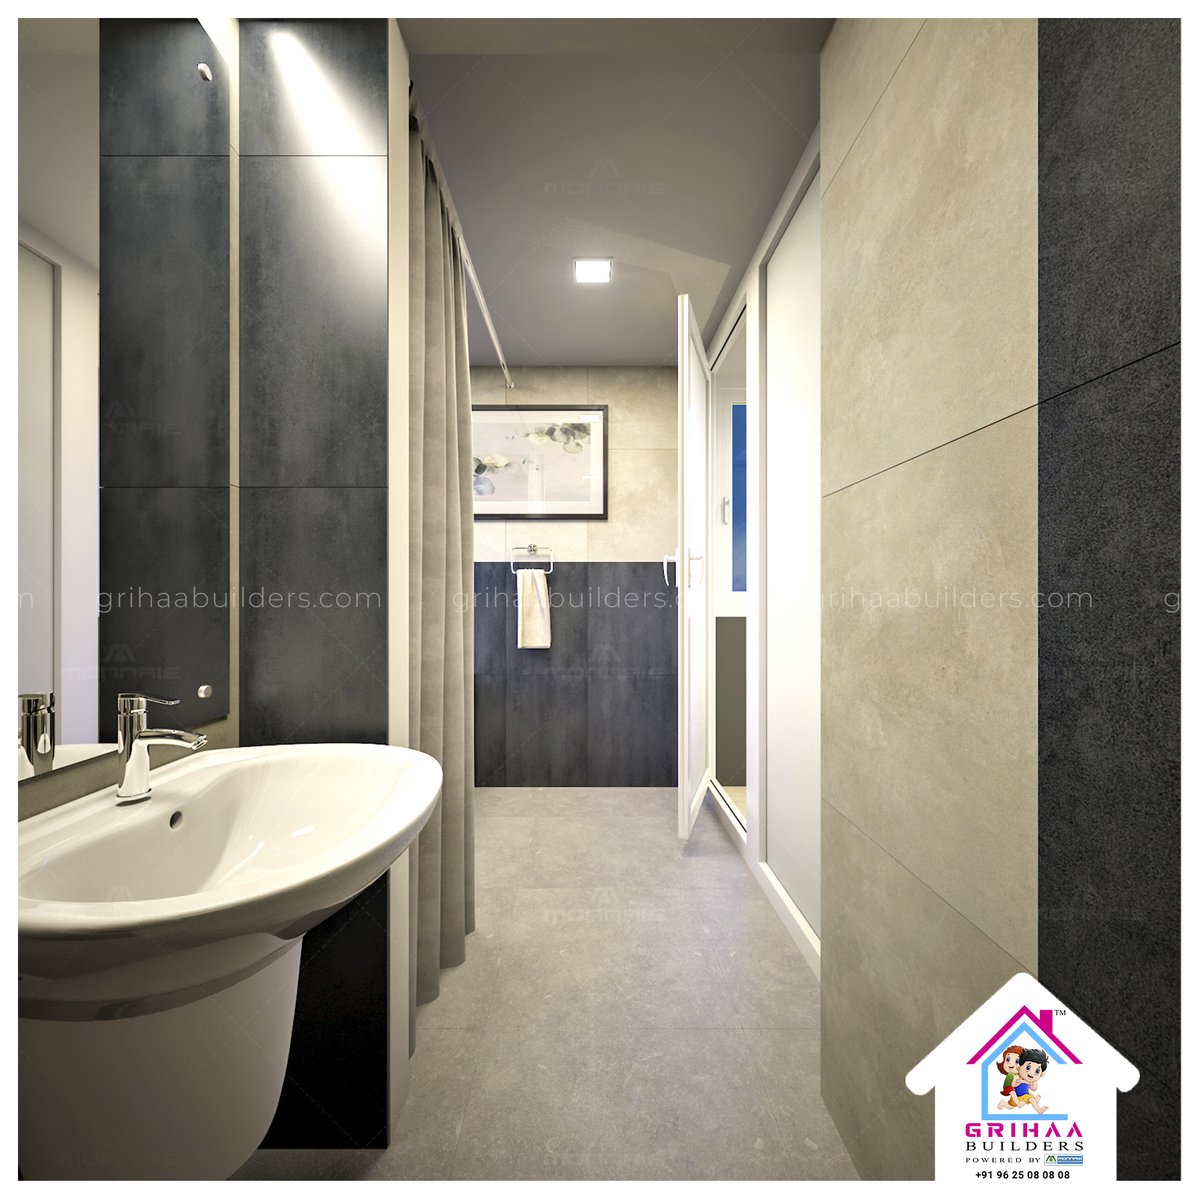 Transforming Bathrooms into Personal Retreats
.
.
.
📞call: +91 9625080808
📧email: grihaasales@gmail.com
🌎web: grihaabuilders.com
.
.
.
#bathroominterior #bathroomdesign #bathroomdecor #bathroominspiration #bathroom #bathroominspo #bathroomideas #interiordesign